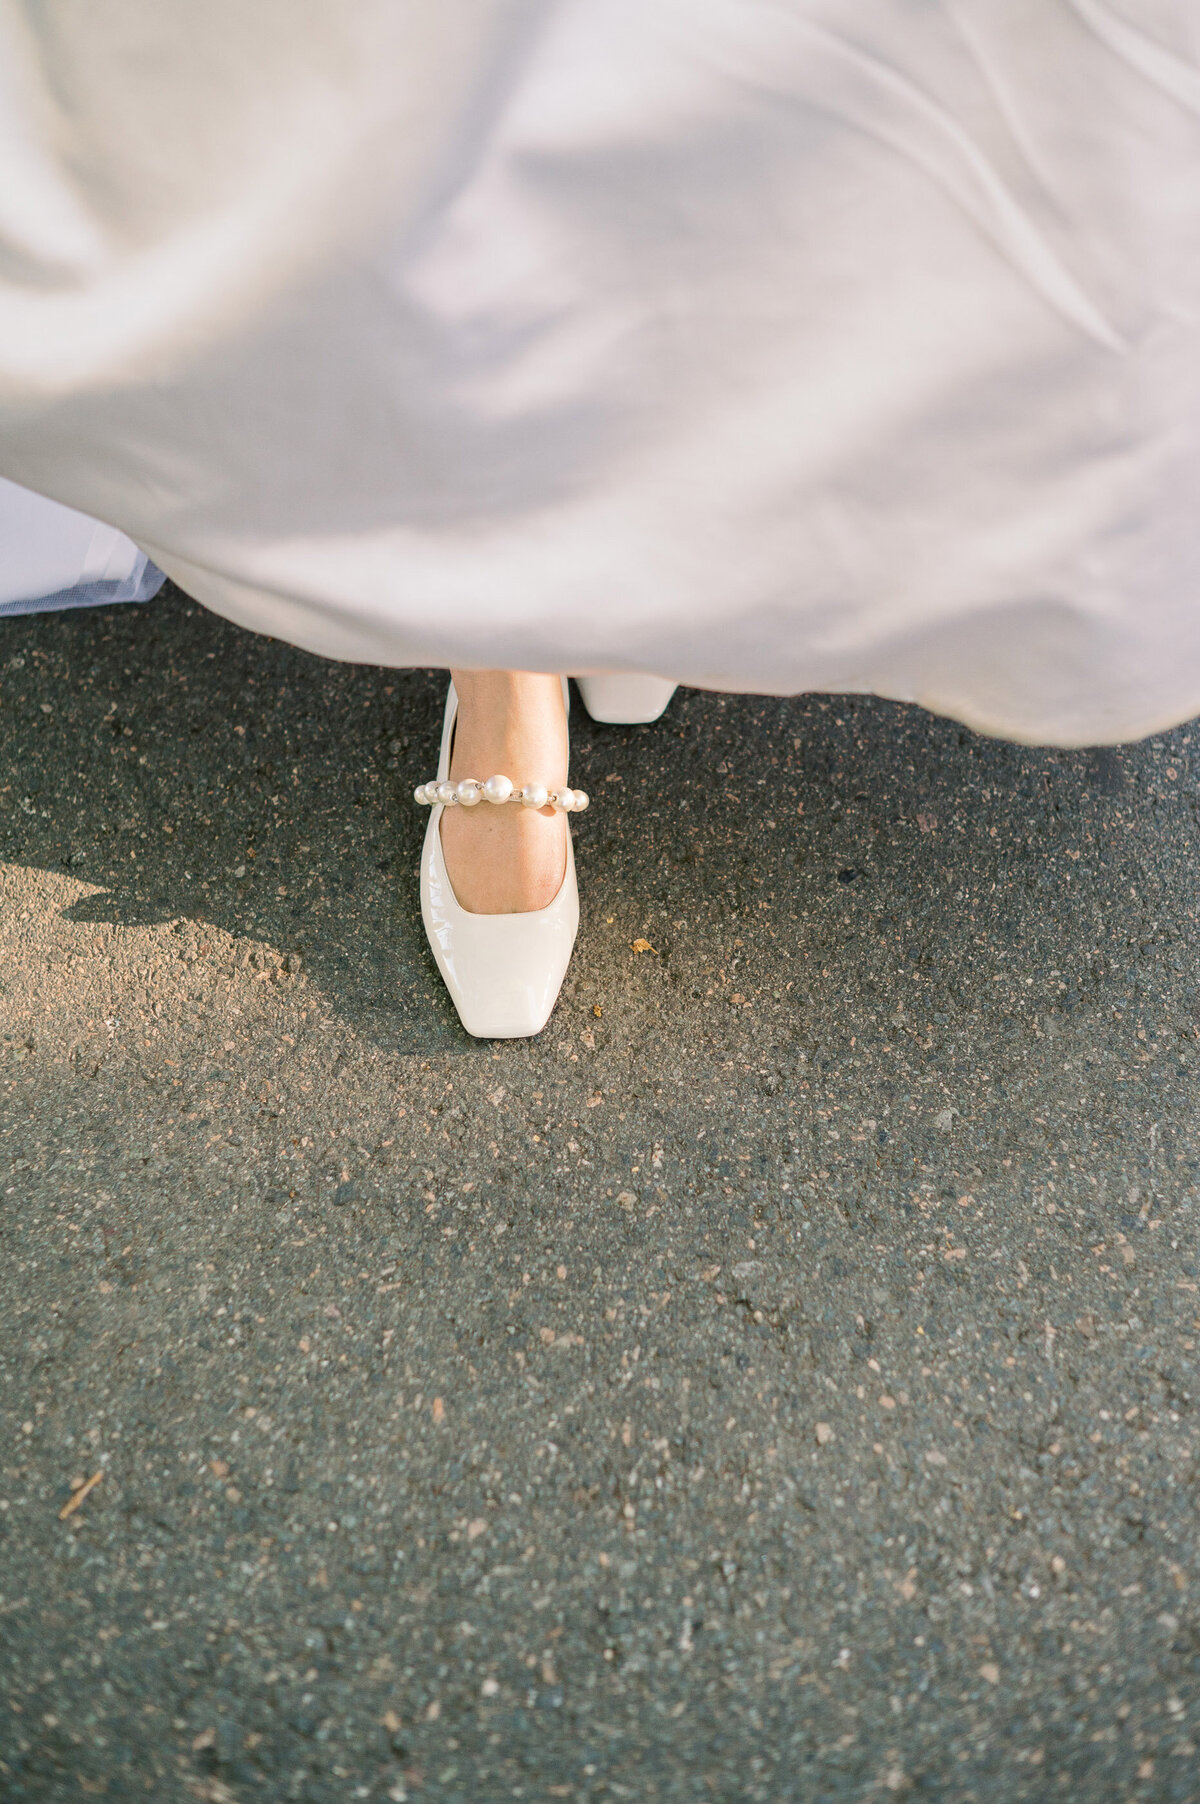 Kate-Murtaugh-Events-wedding-wedding-shoes-bride-portrait-Boston